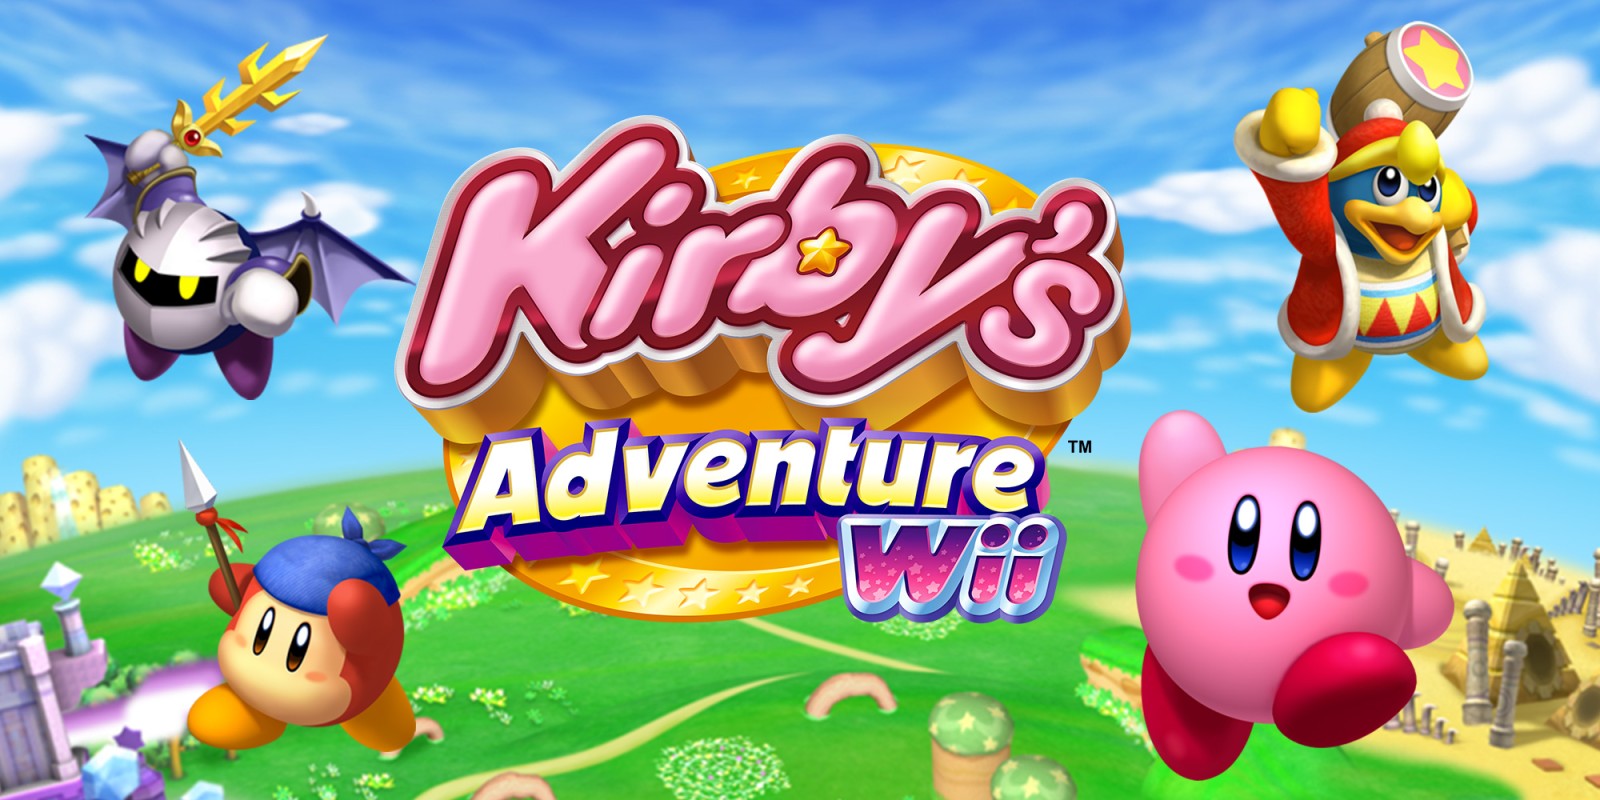 Kirby's Adventure Wii Wii Games Nintendo